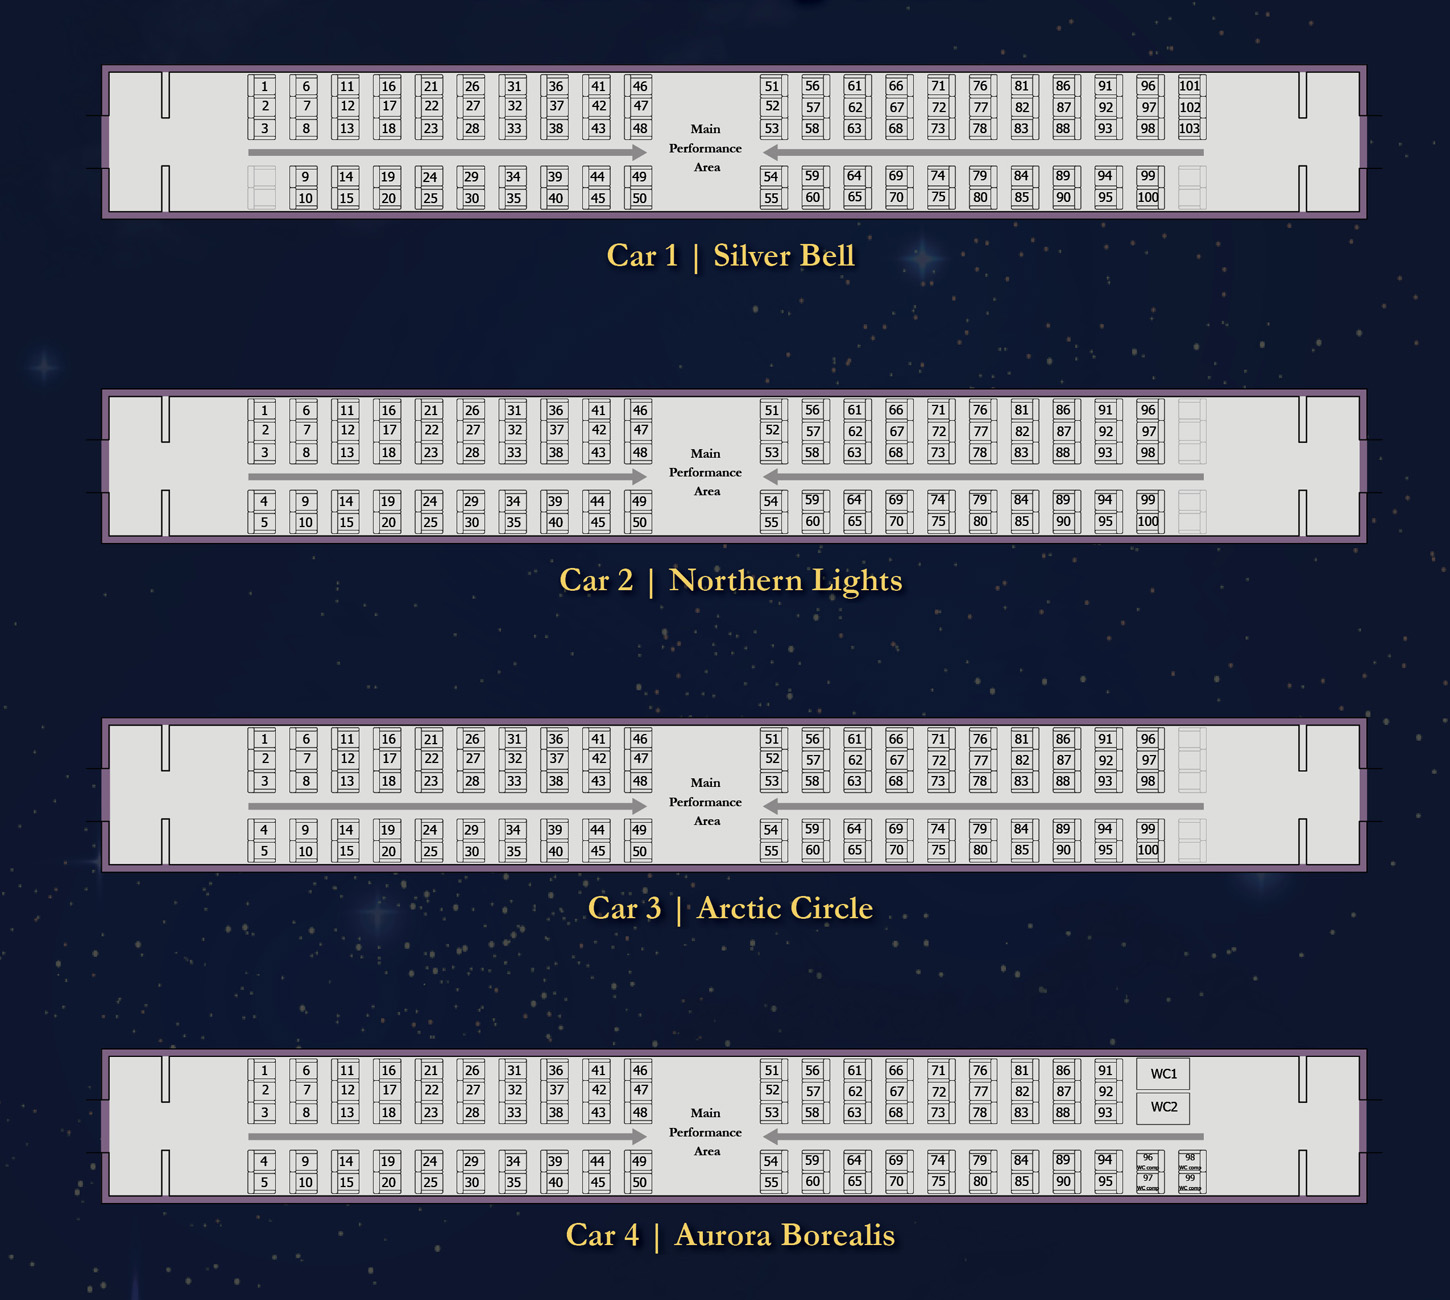 Polar Park Tickets & Seating Chart - ETC